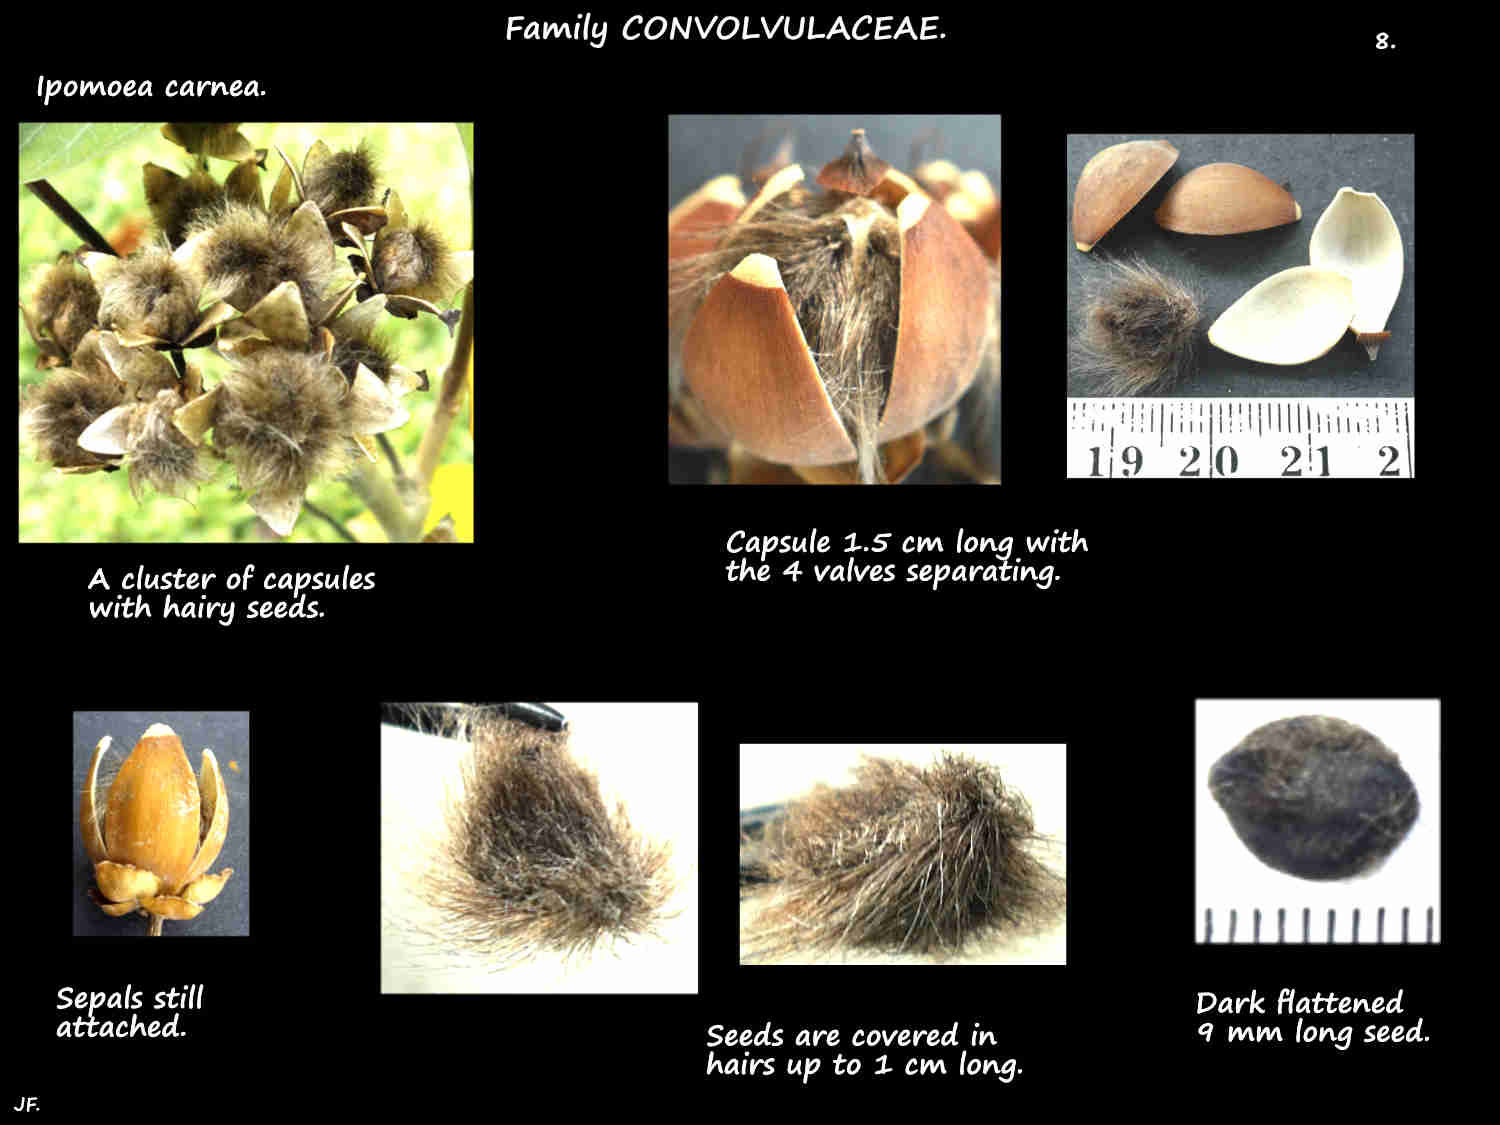 8 Capsules & hairy seeds of Ipomoea carnea